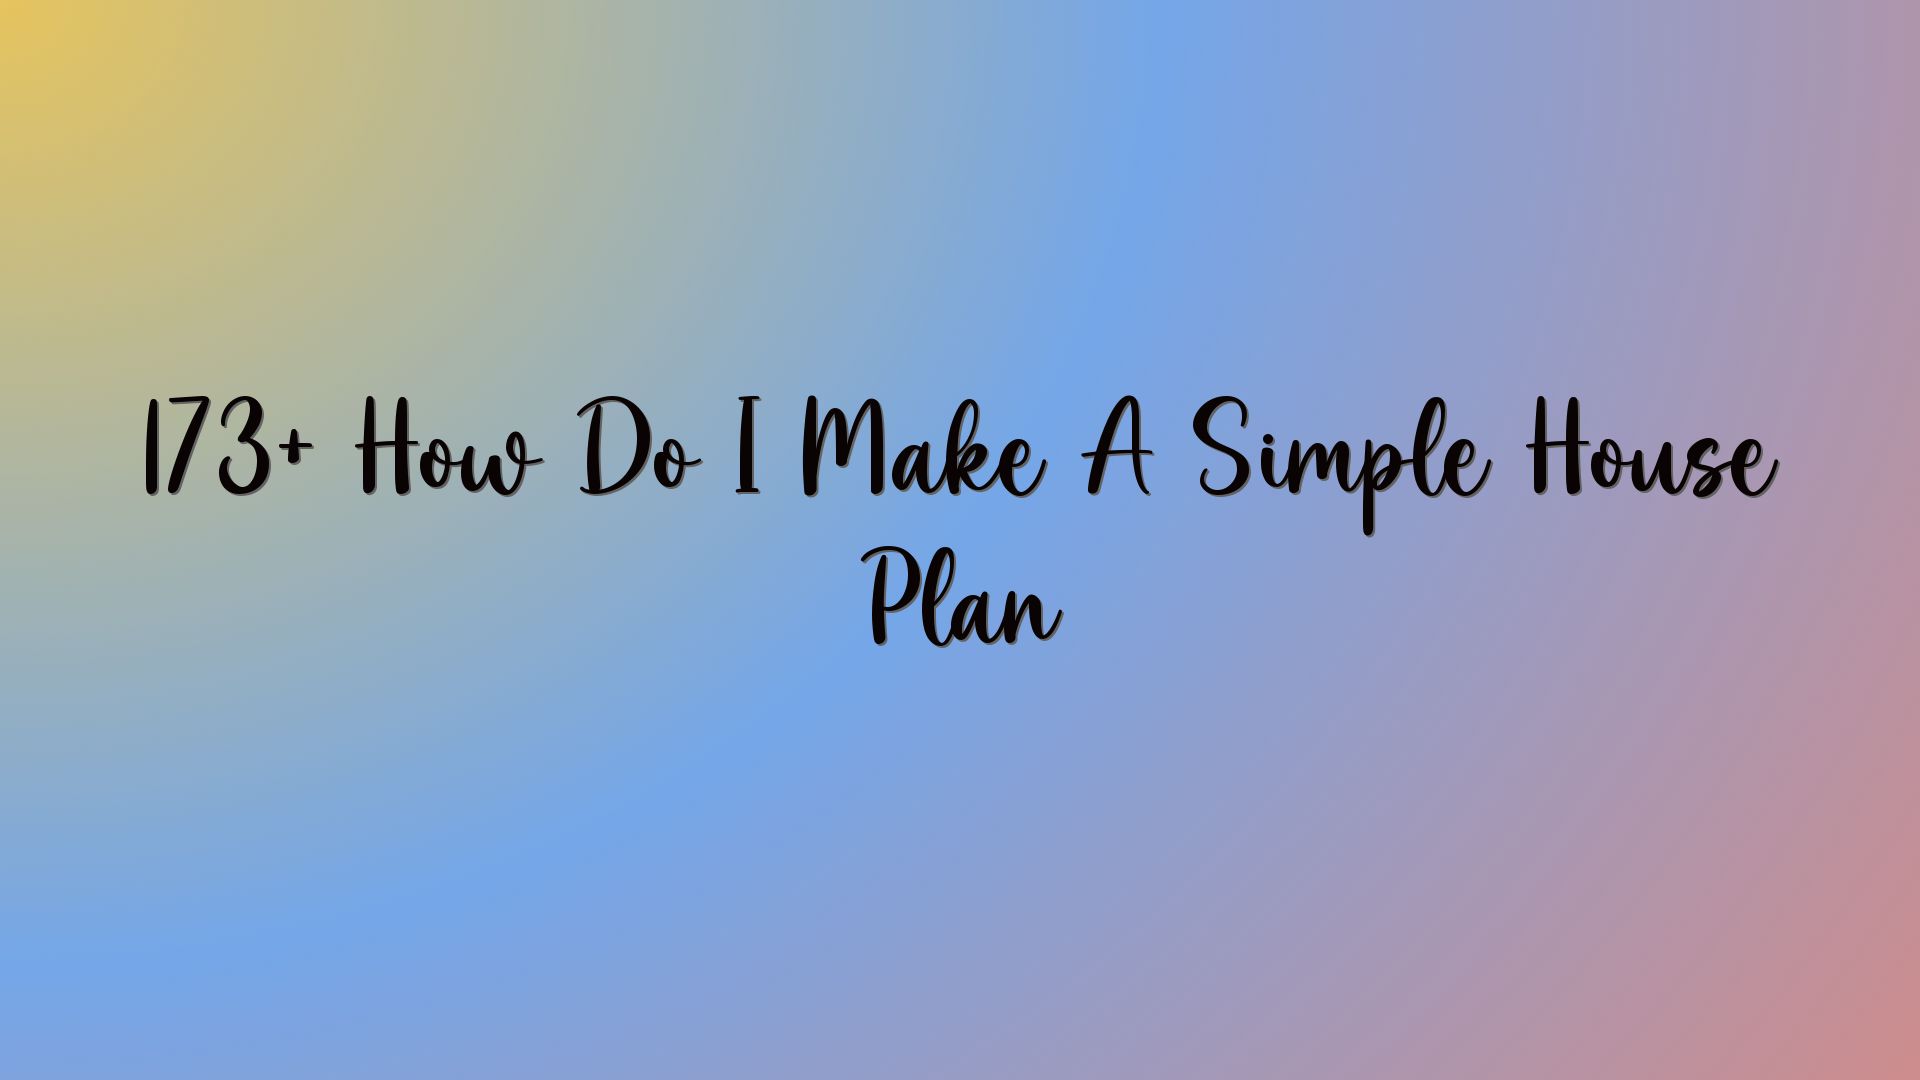 173+ How Do I Make A Simple House Plan